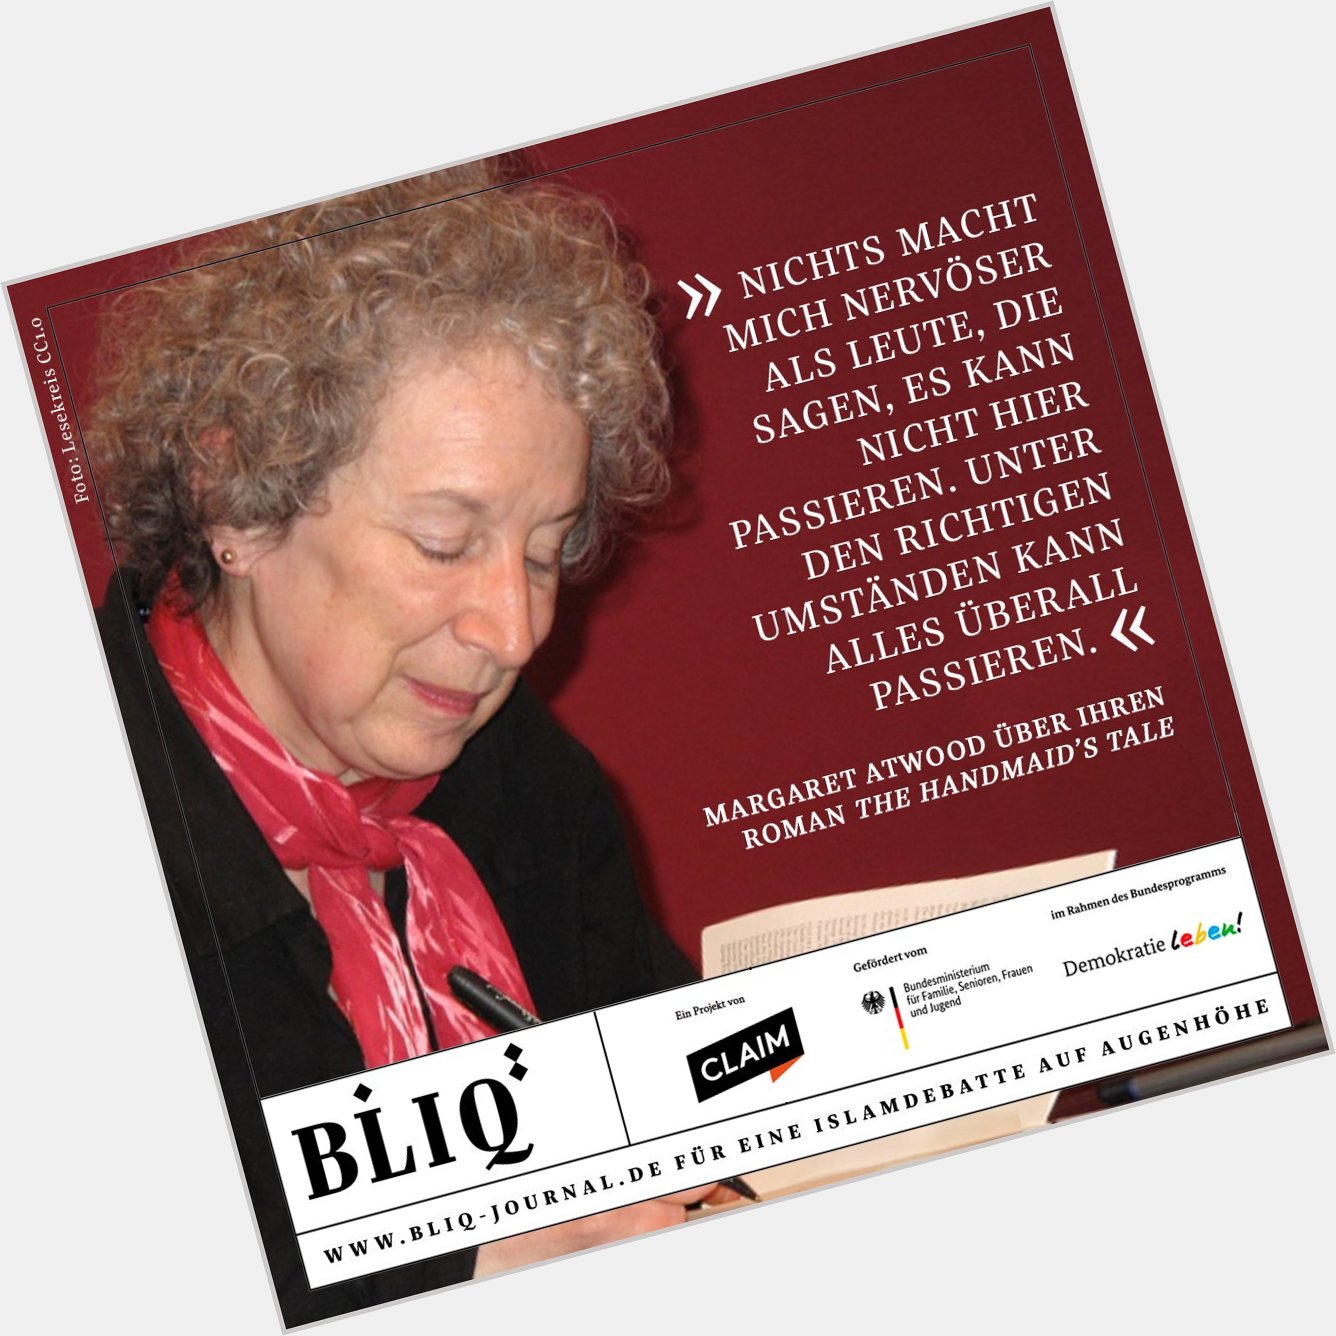 Happy Birthday Margaret Atwood!  